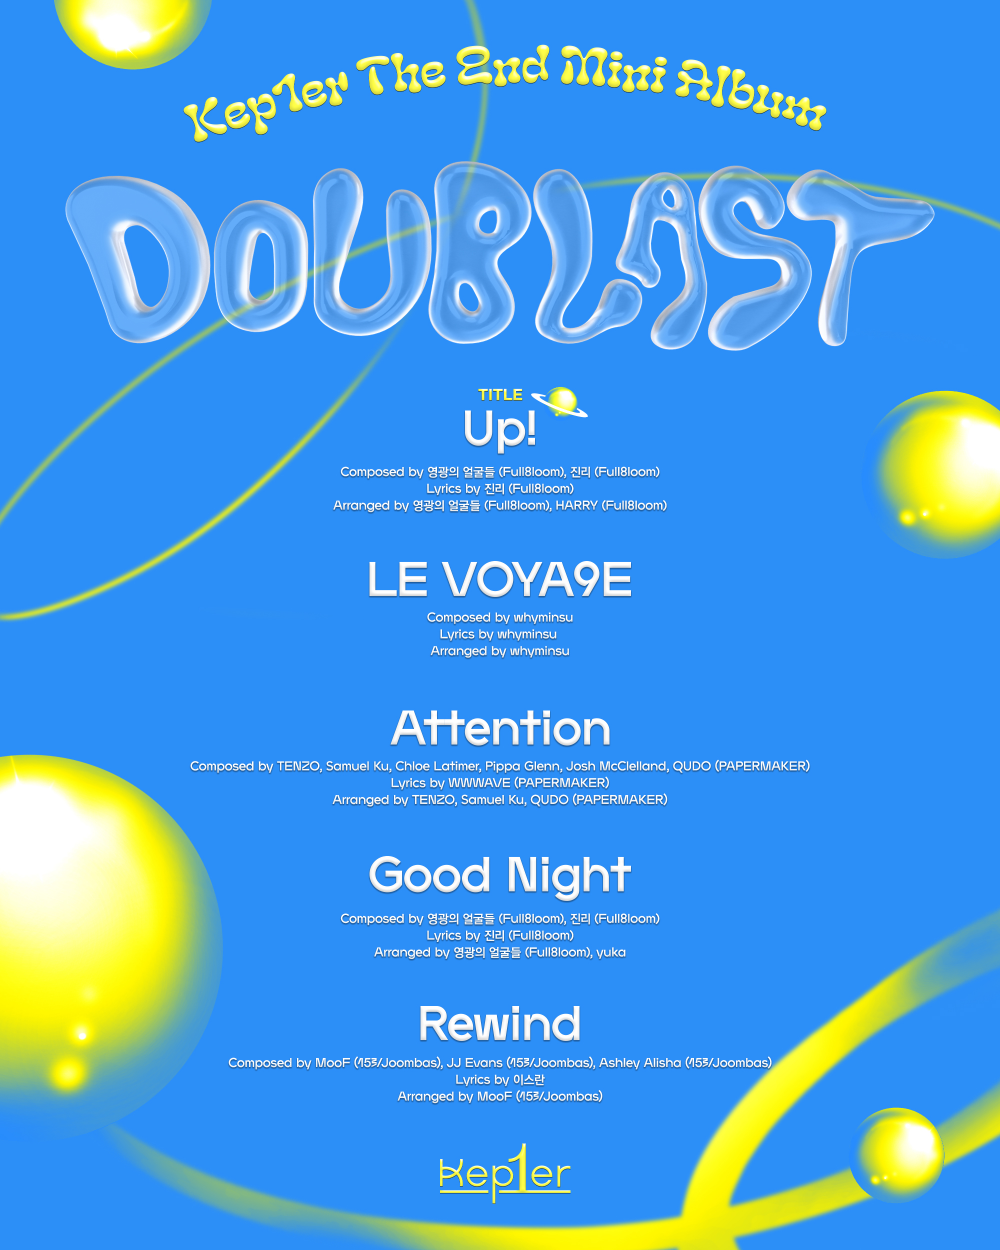 [Камбэк] Kep1er мини-альбом «Doublast»: музыкальный клип "Up!"